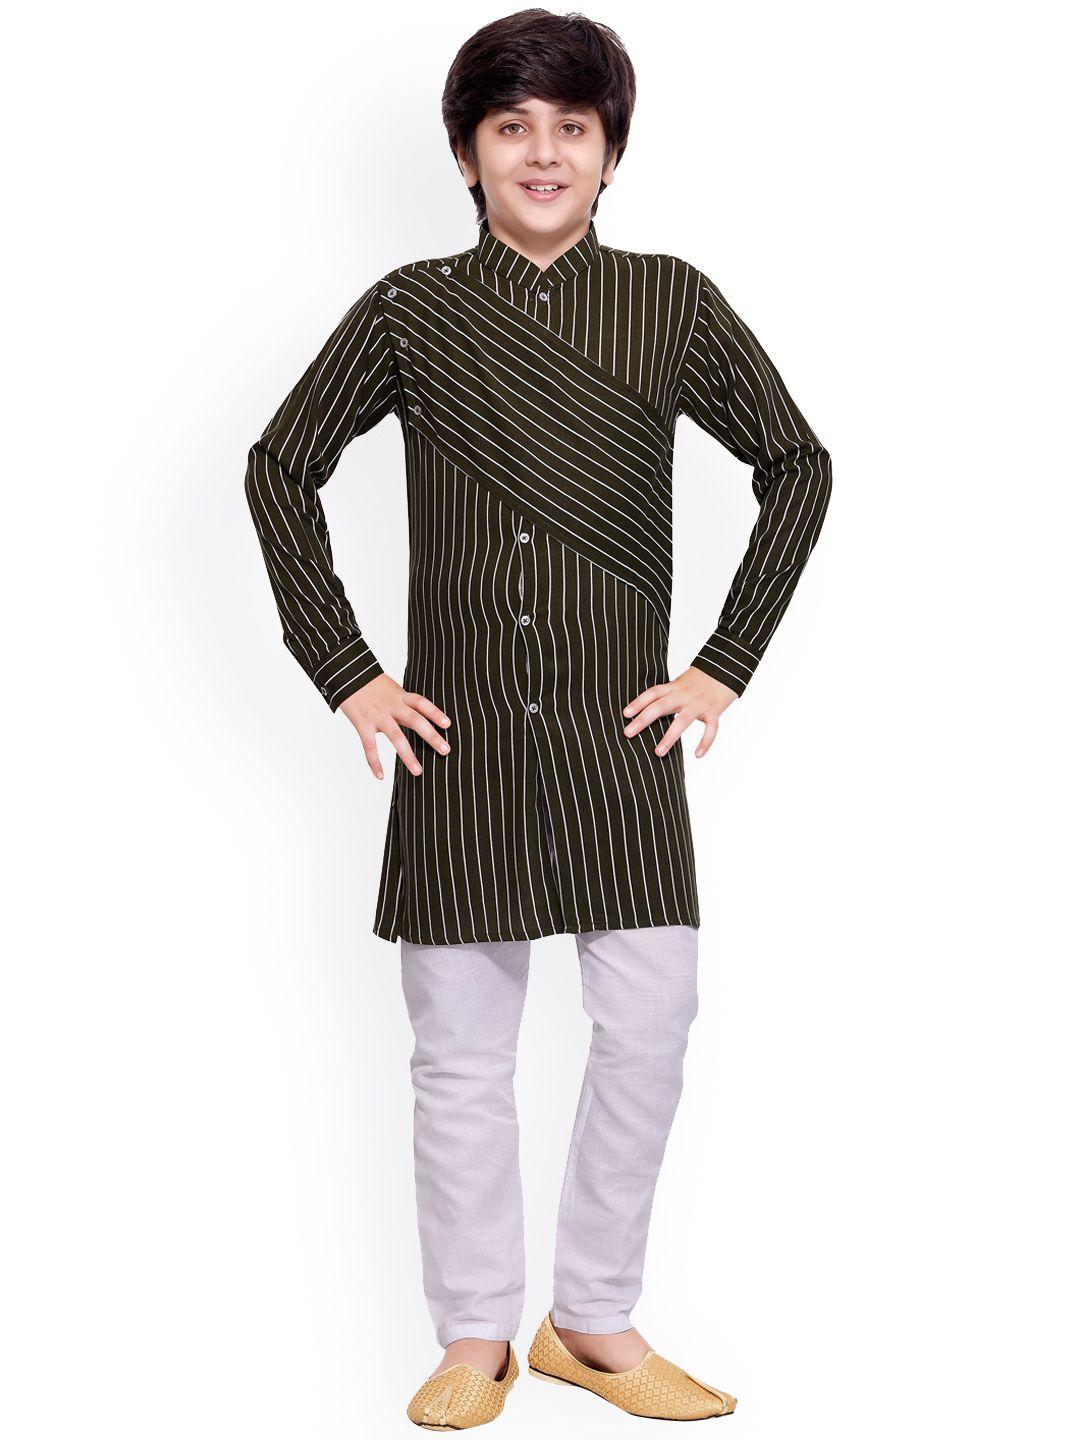 jeetethnics boys olive green & white striped kurta with pyjamas